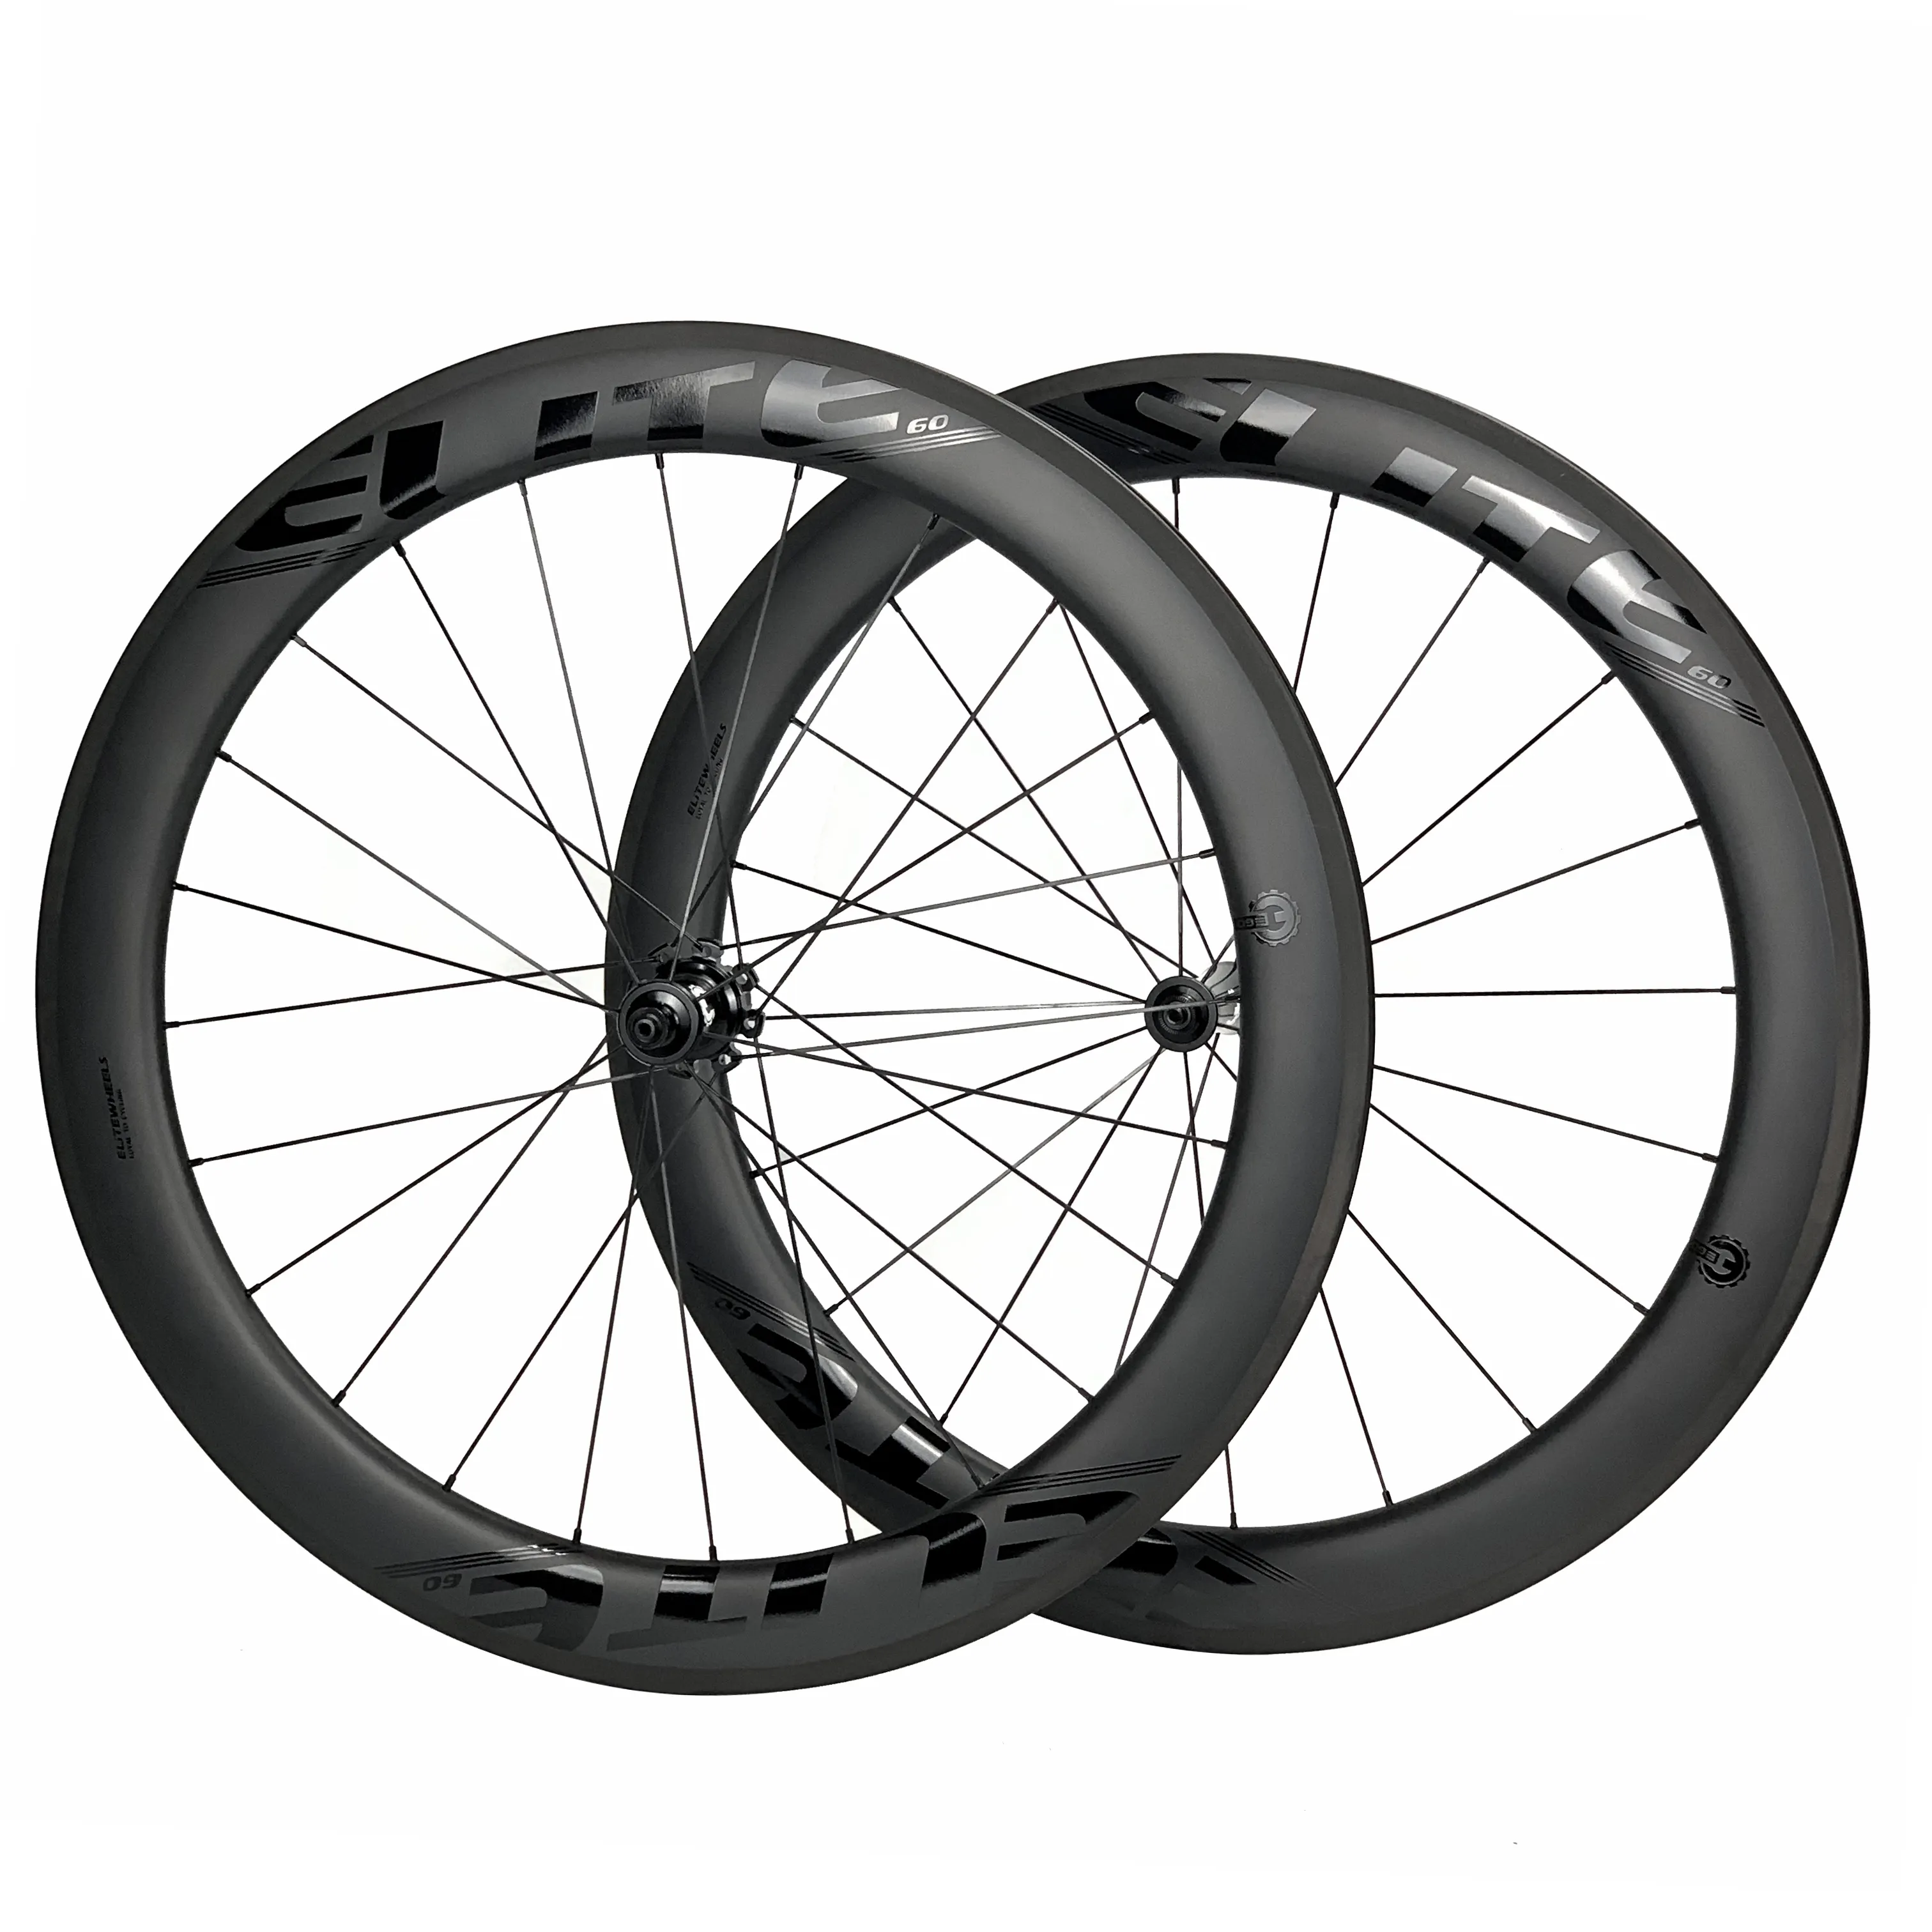 ELITEWHEELS ENT 700c Carbon Fiber Wheel set Cycling Clincher Carbon Wheels Road Bike Bicycle Wheelset